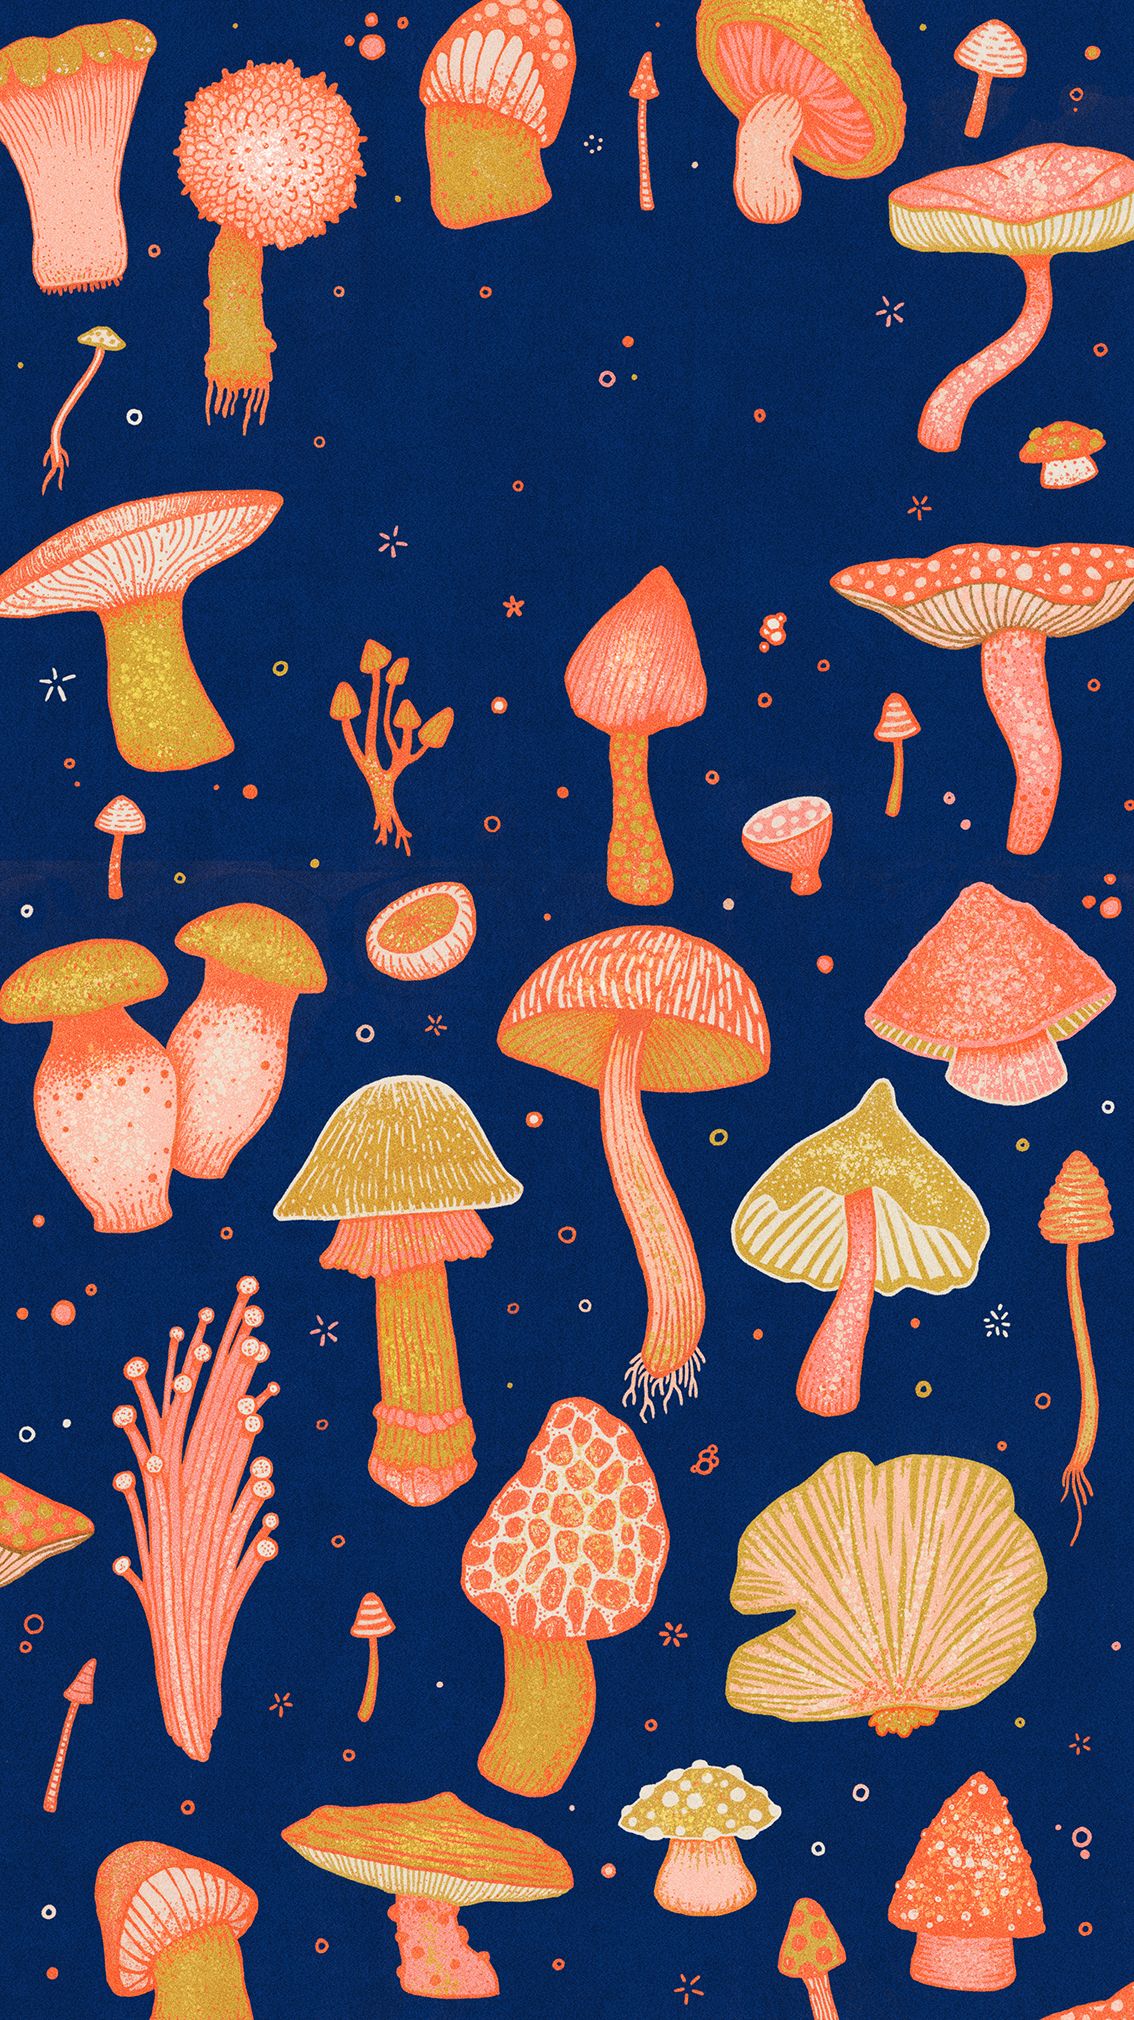 Aesthetic Mushroom Wallpapers